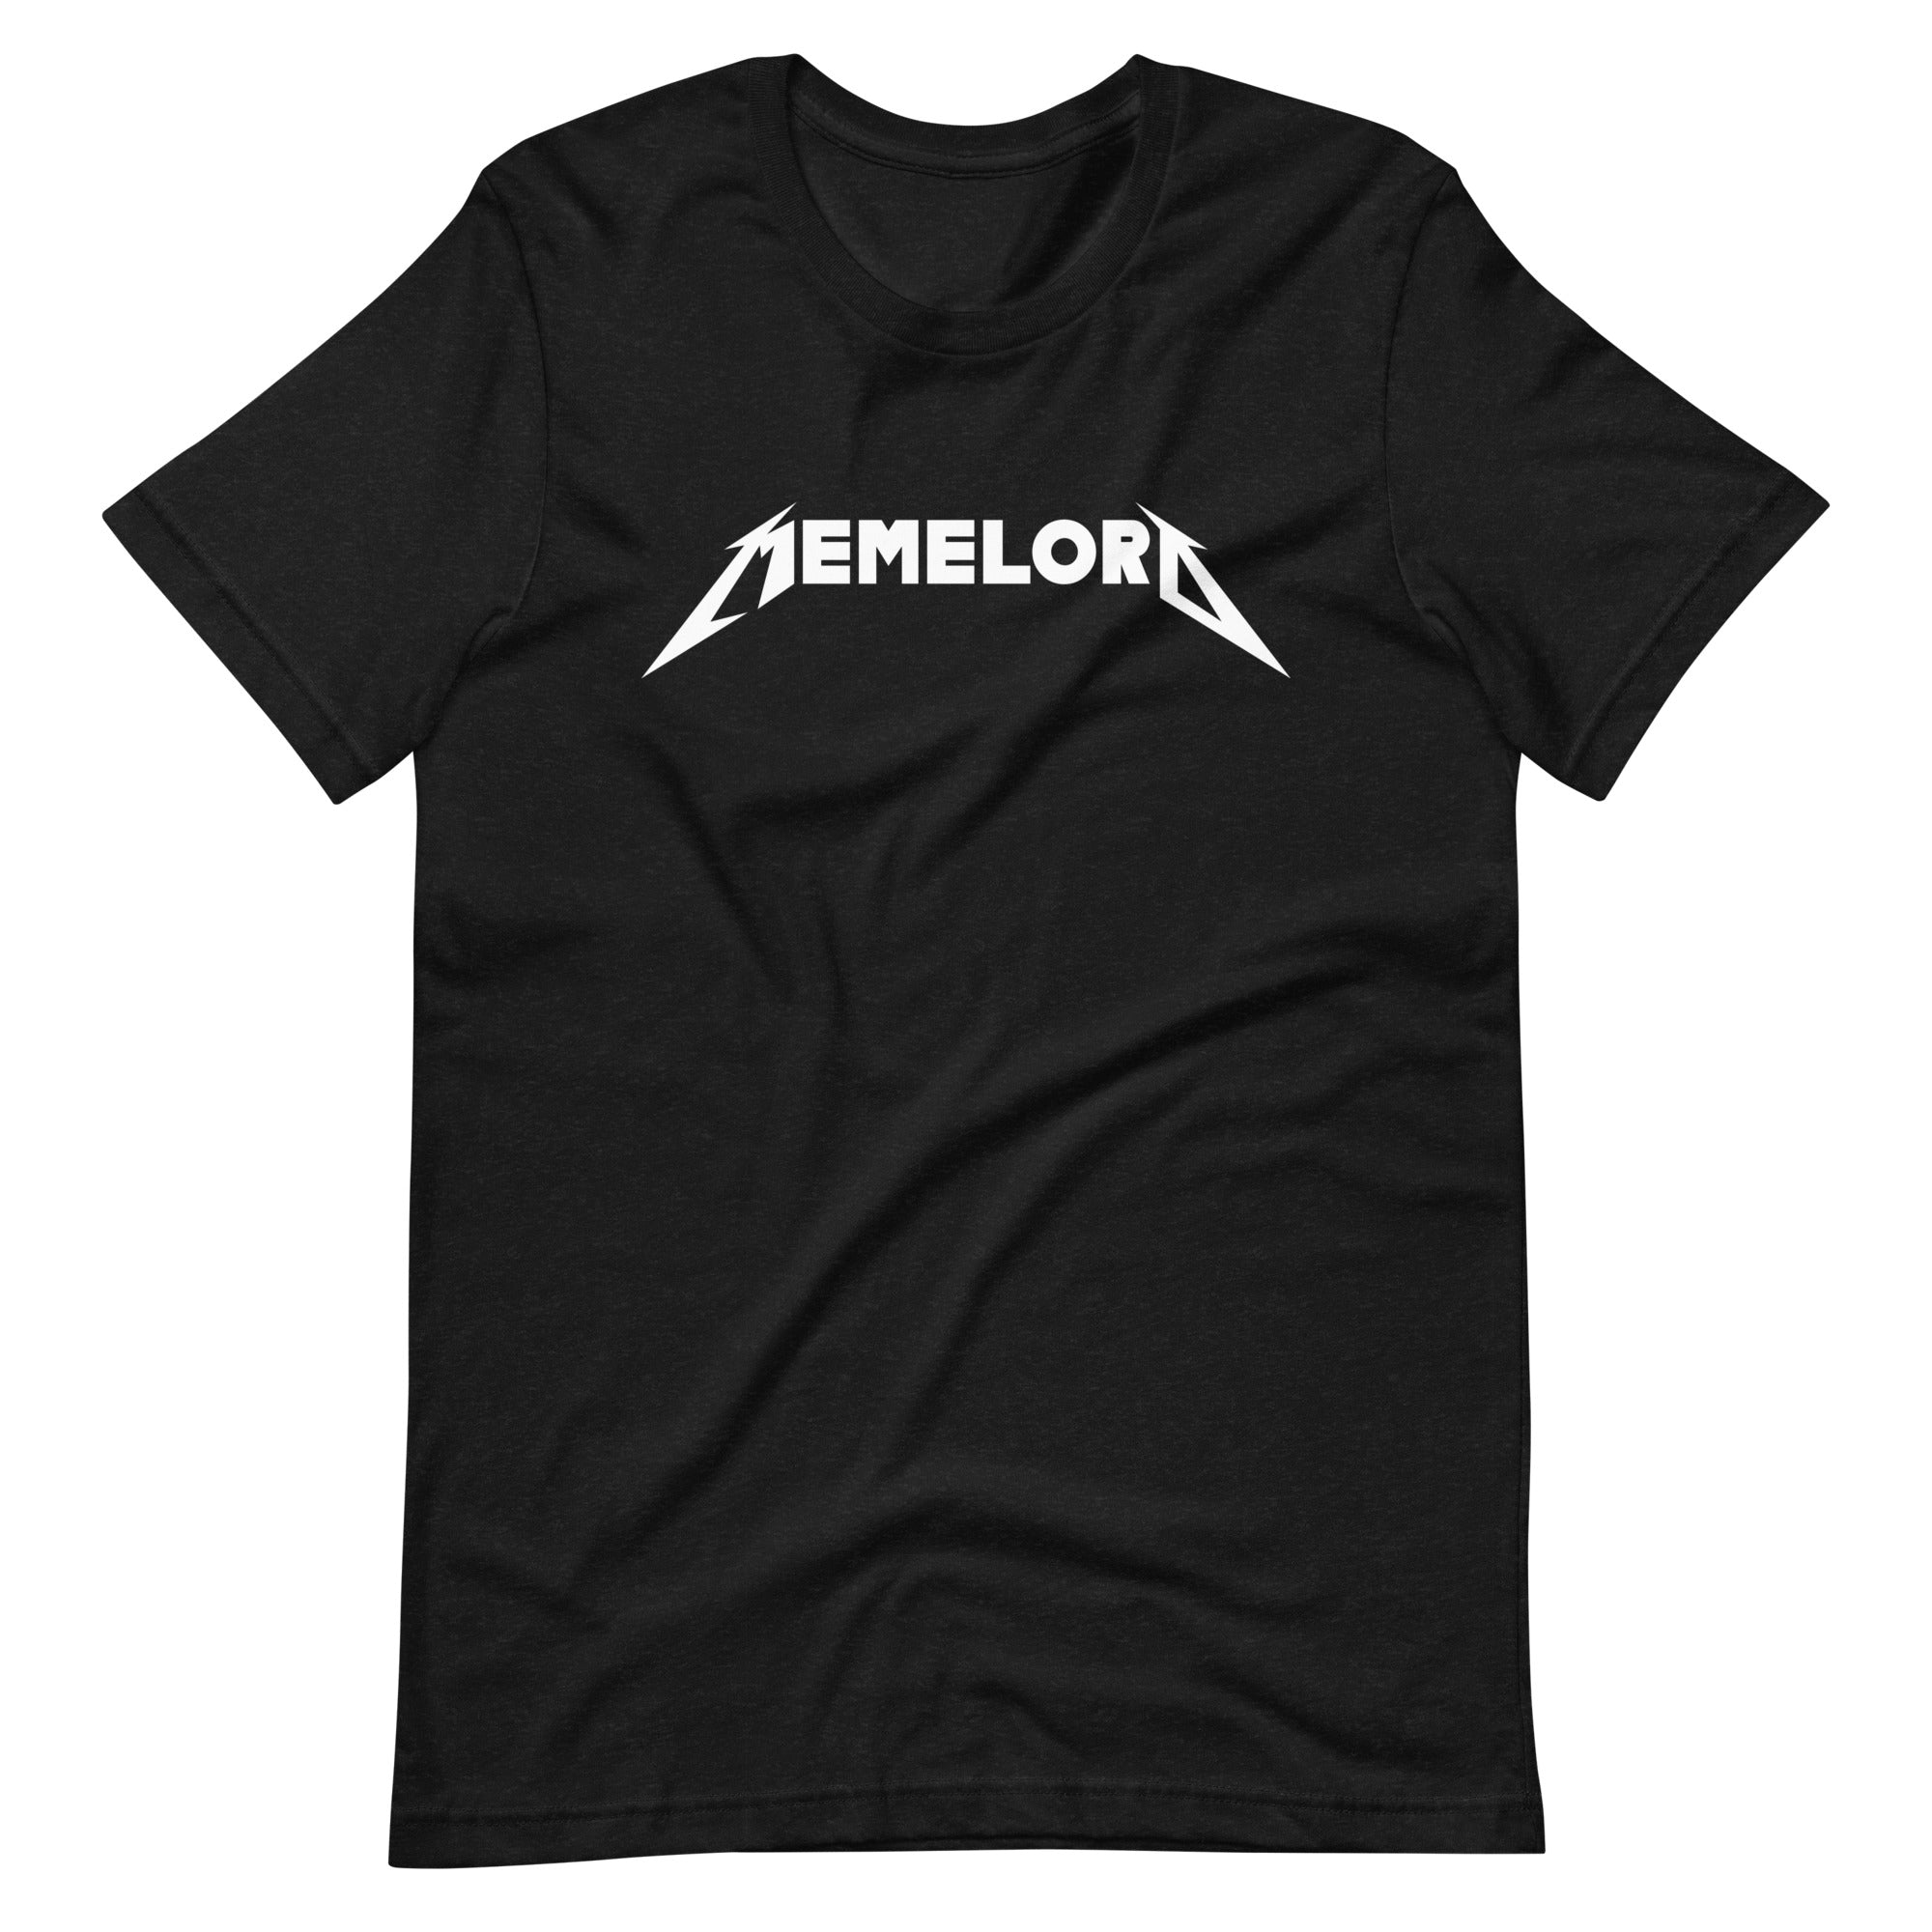 Memelord T-Shirt